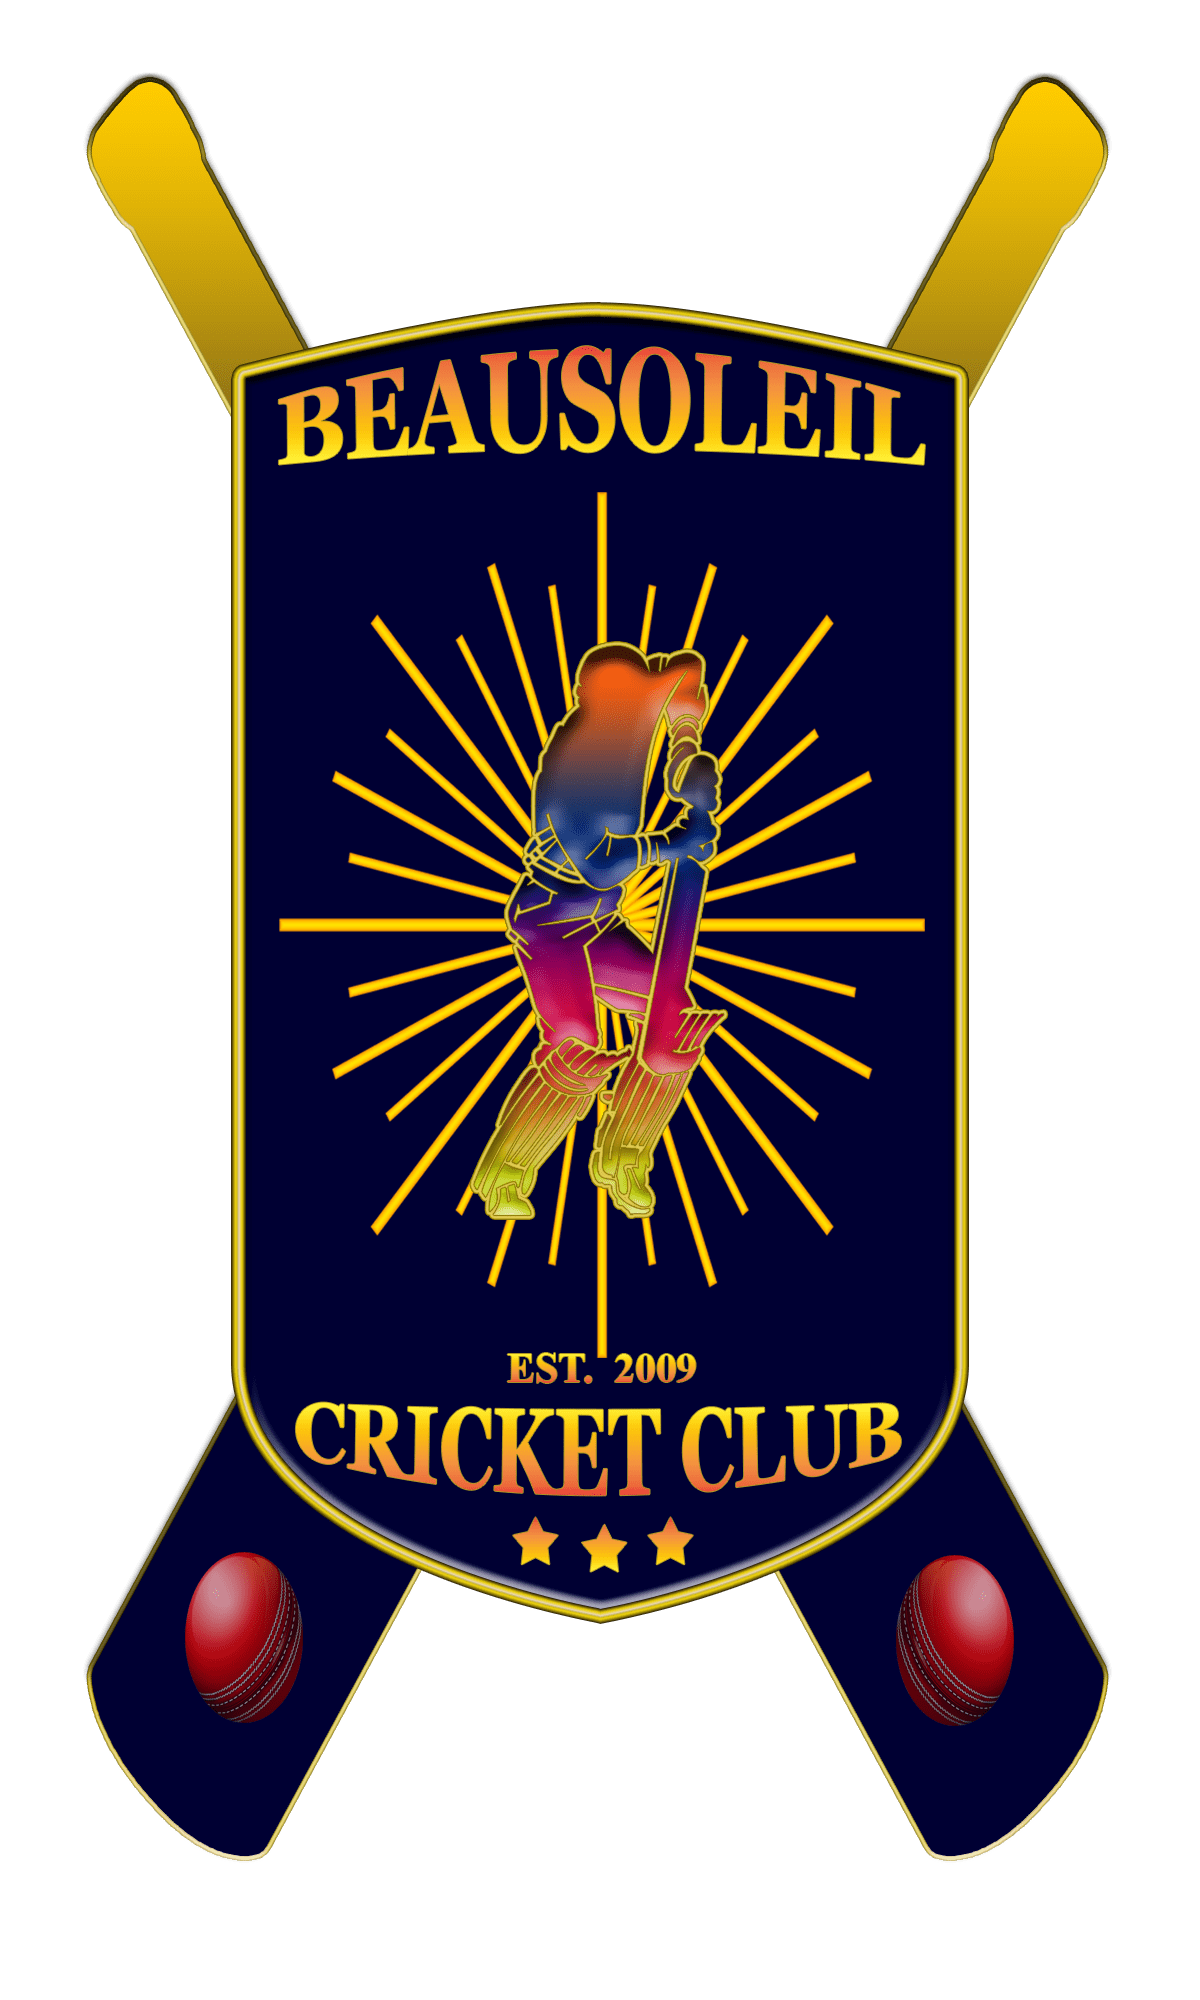 BEAUSOLEIL CRICKET CLUB